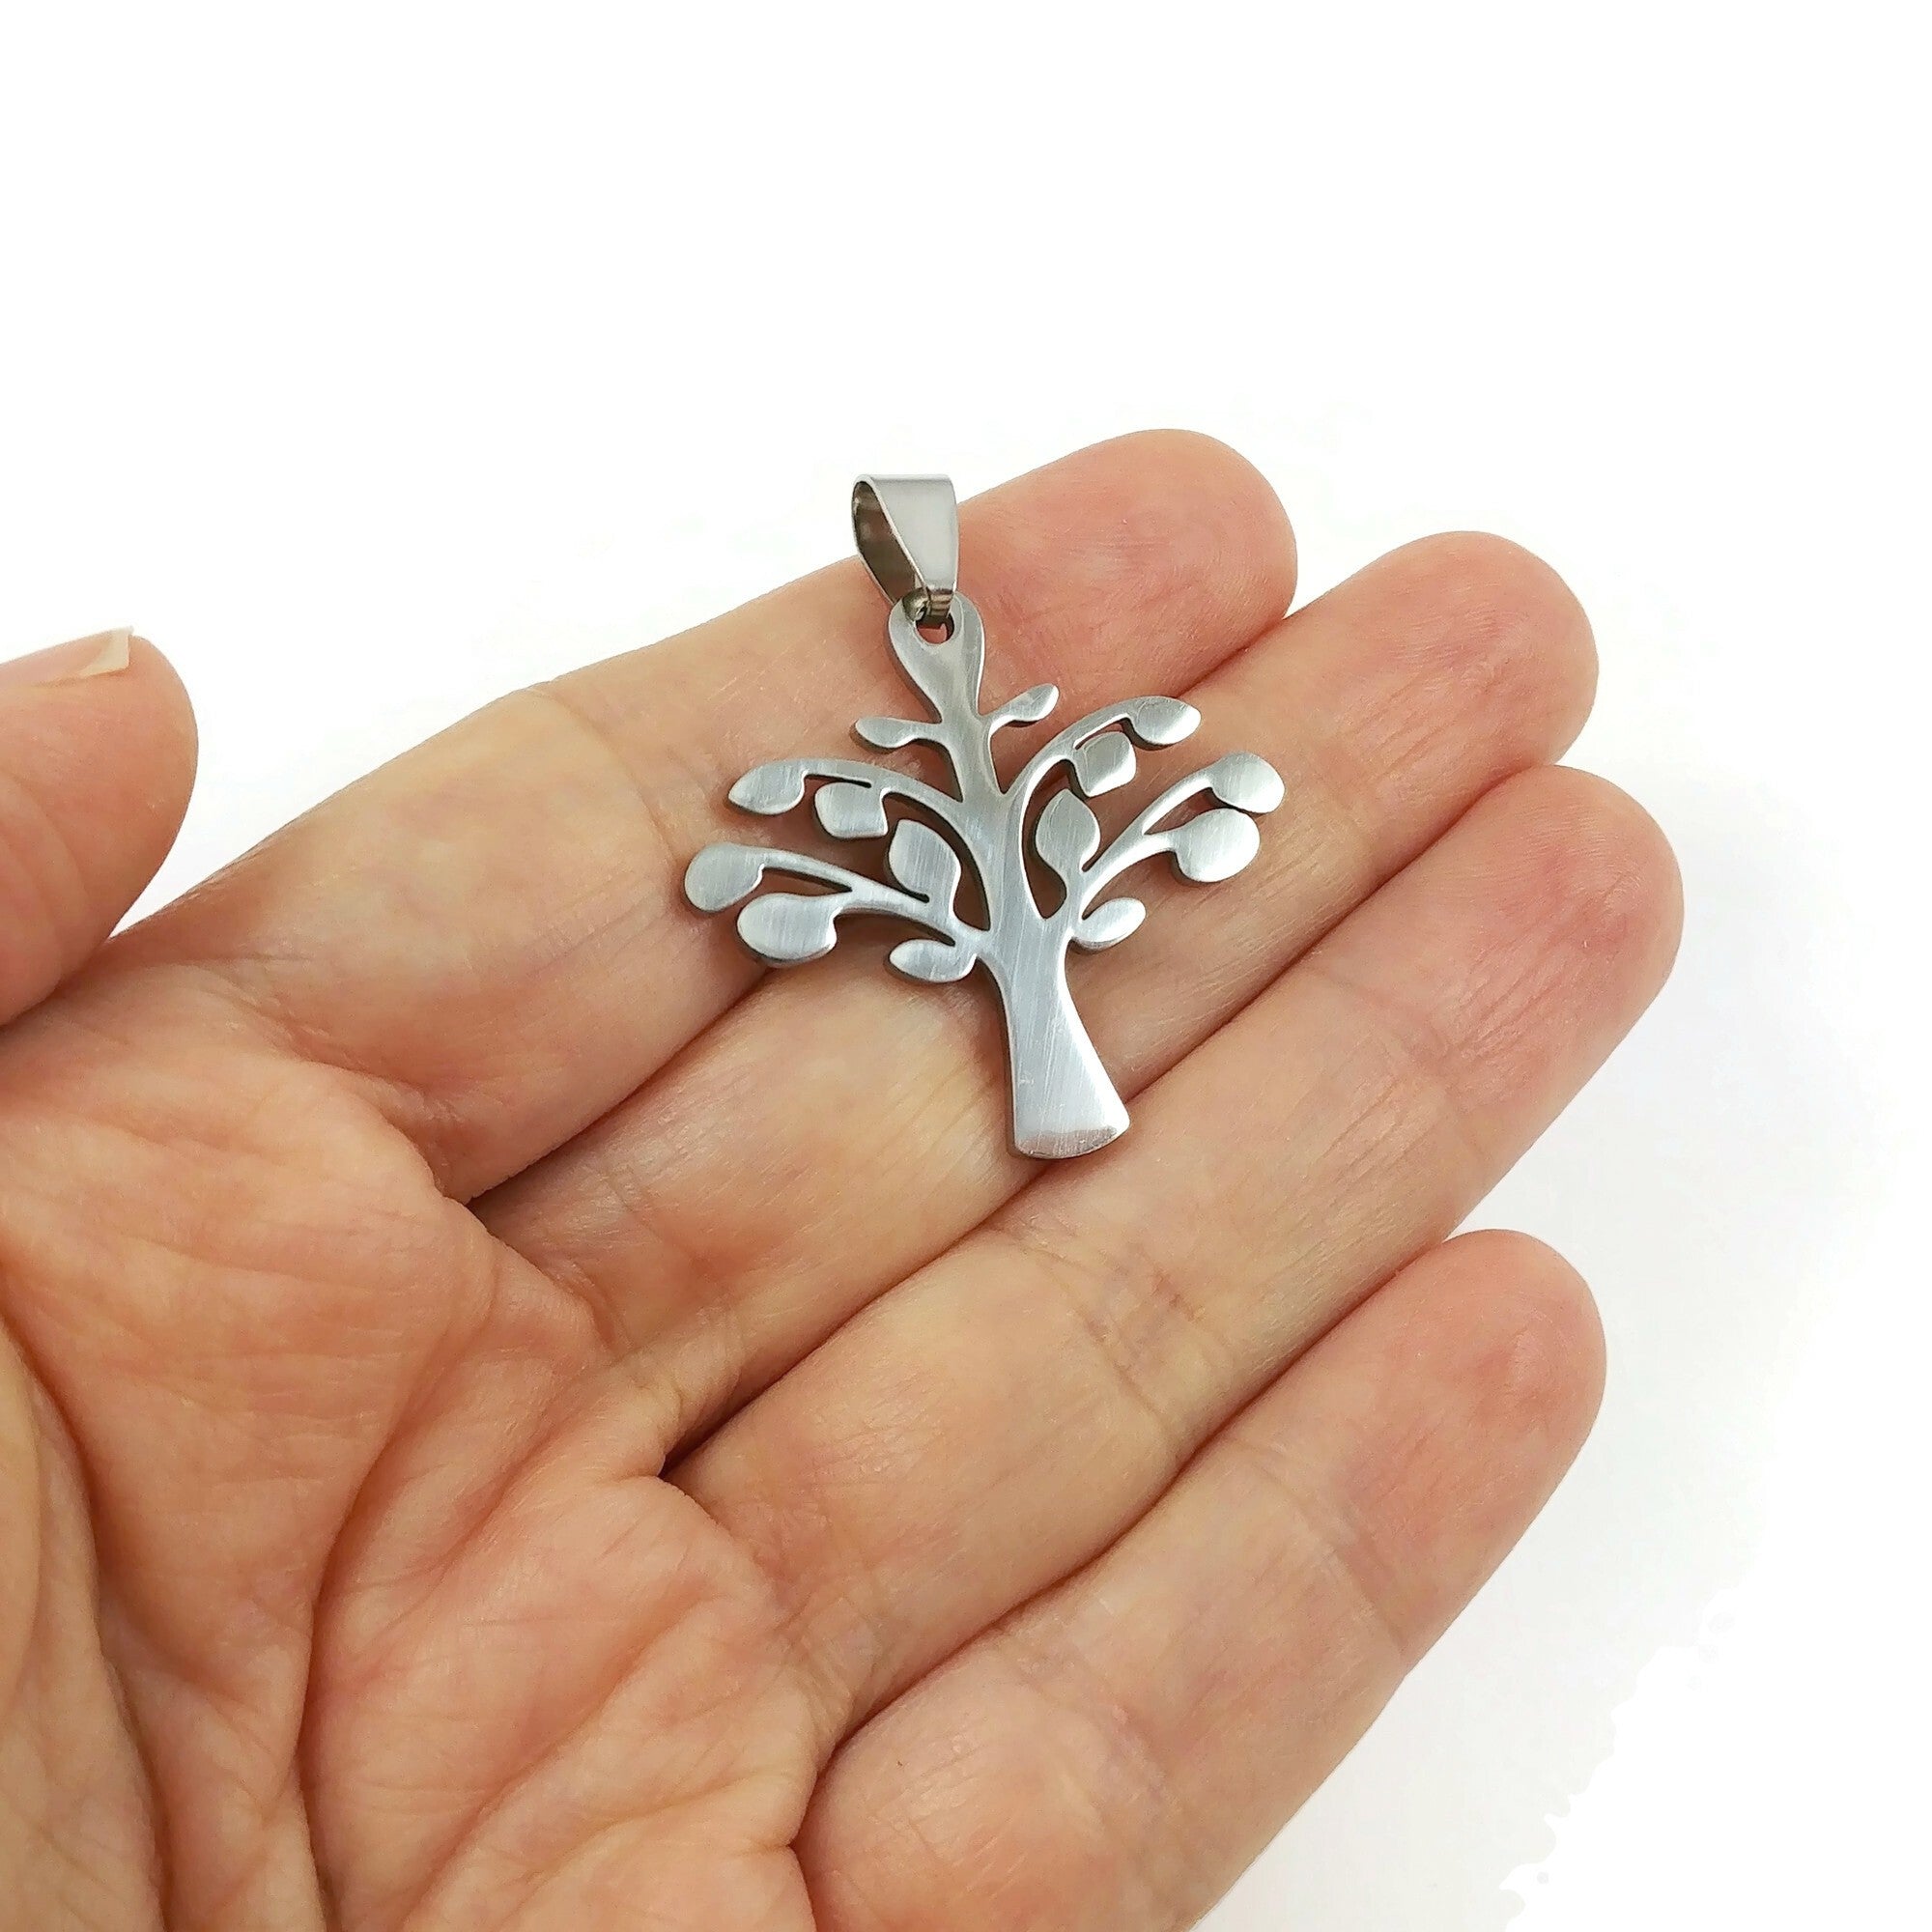 Tree pendant stainless steel DIY necklace pendant